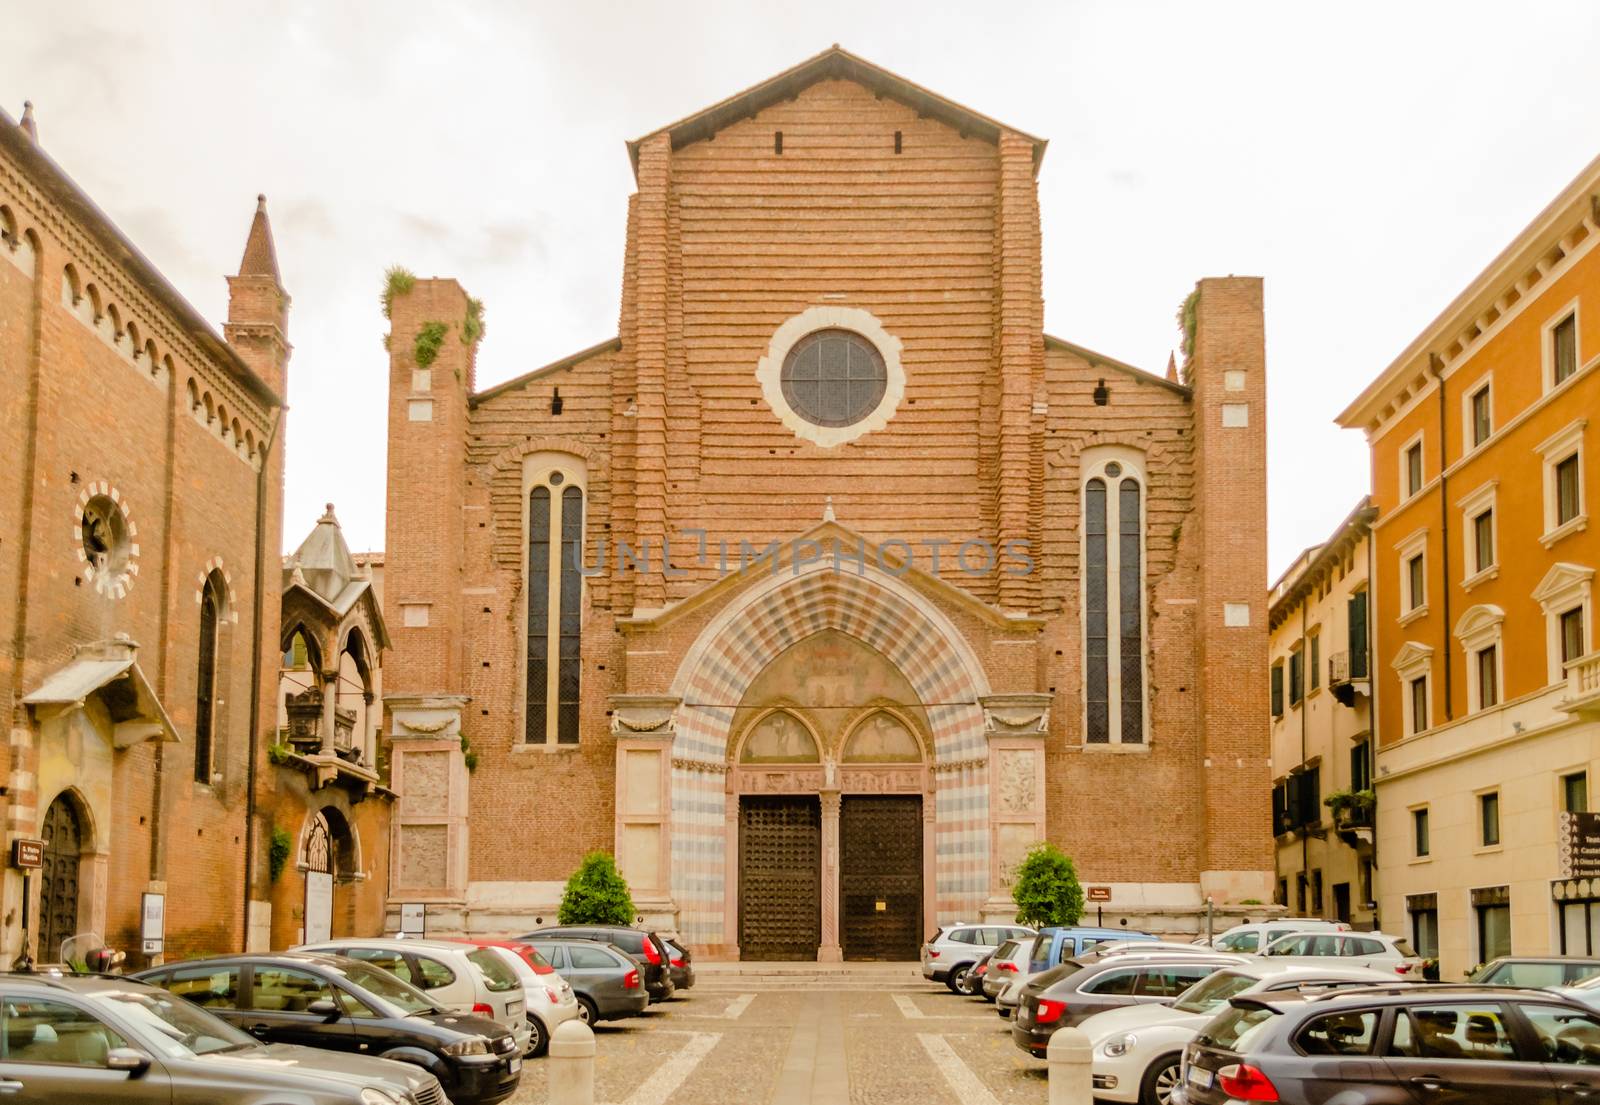 Church of Sant Anastasia in central Verona, Italy